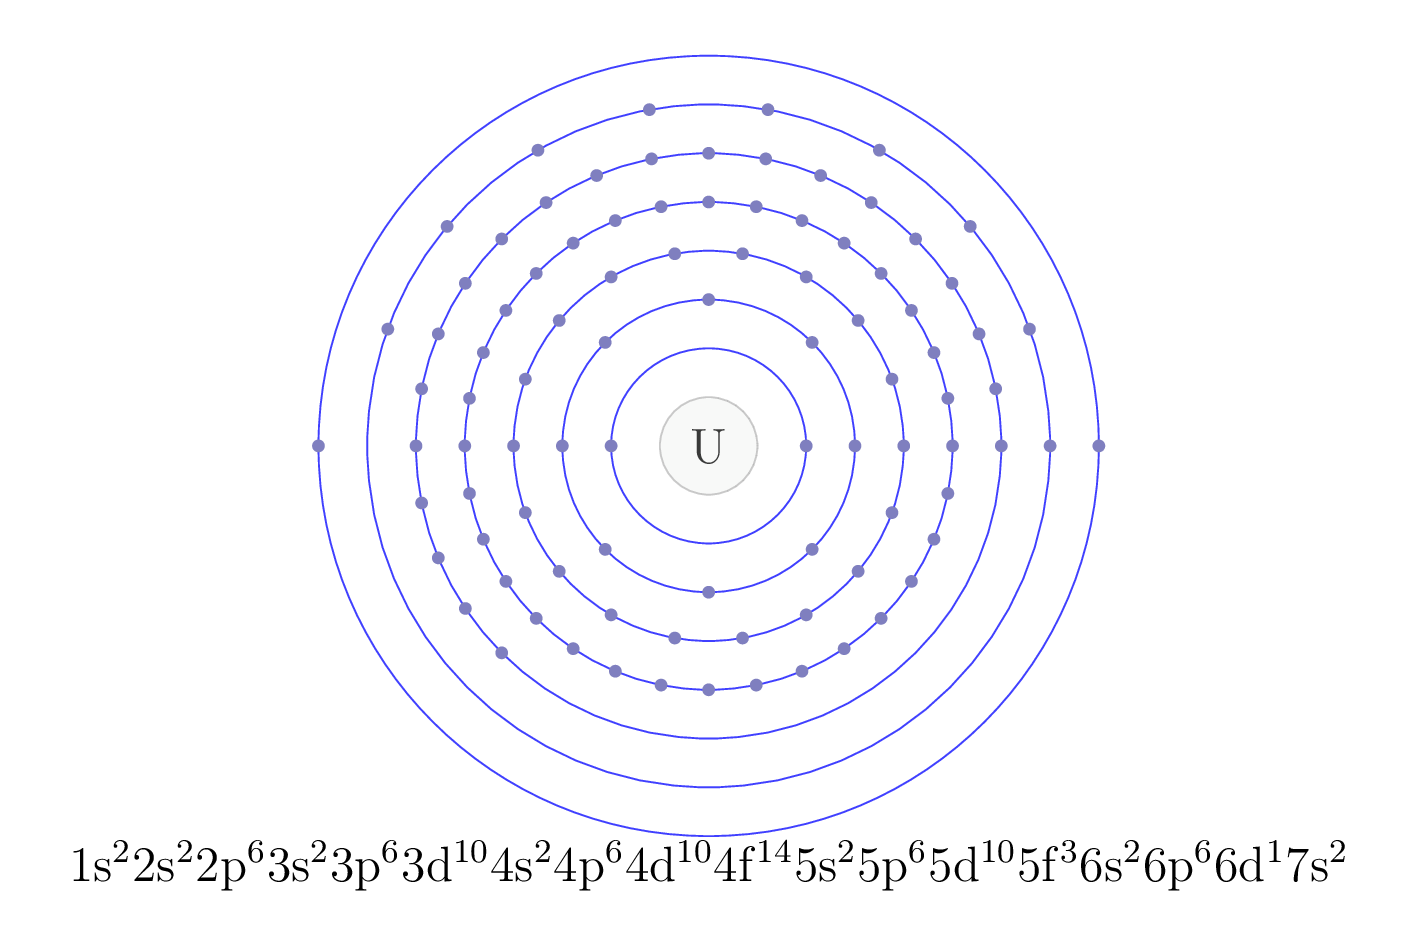 electron configuration of element U